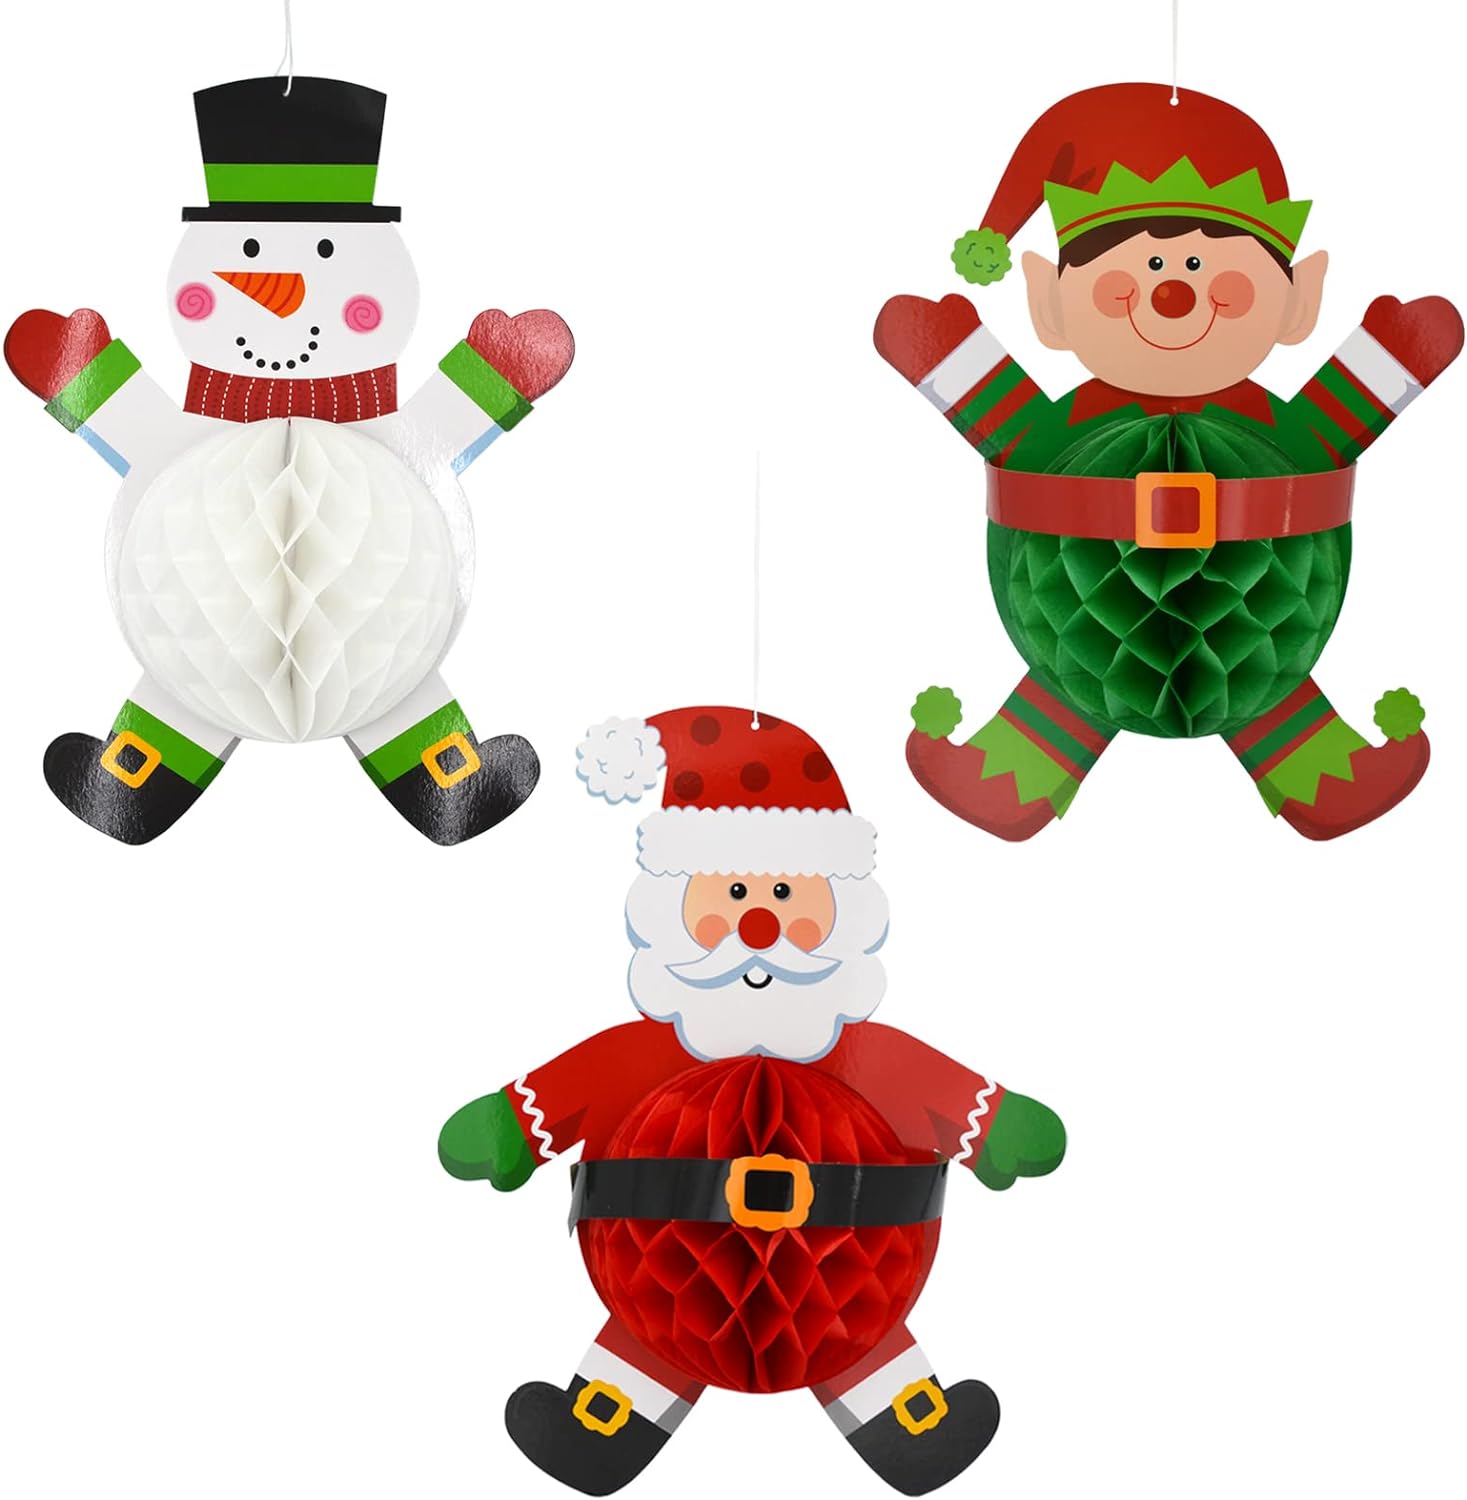 Fassory Large Honeycomb Paper Christmas Decorations, Santa Elf Snowman Christmas Ornaments Hanging Decorations Reusable (Large)